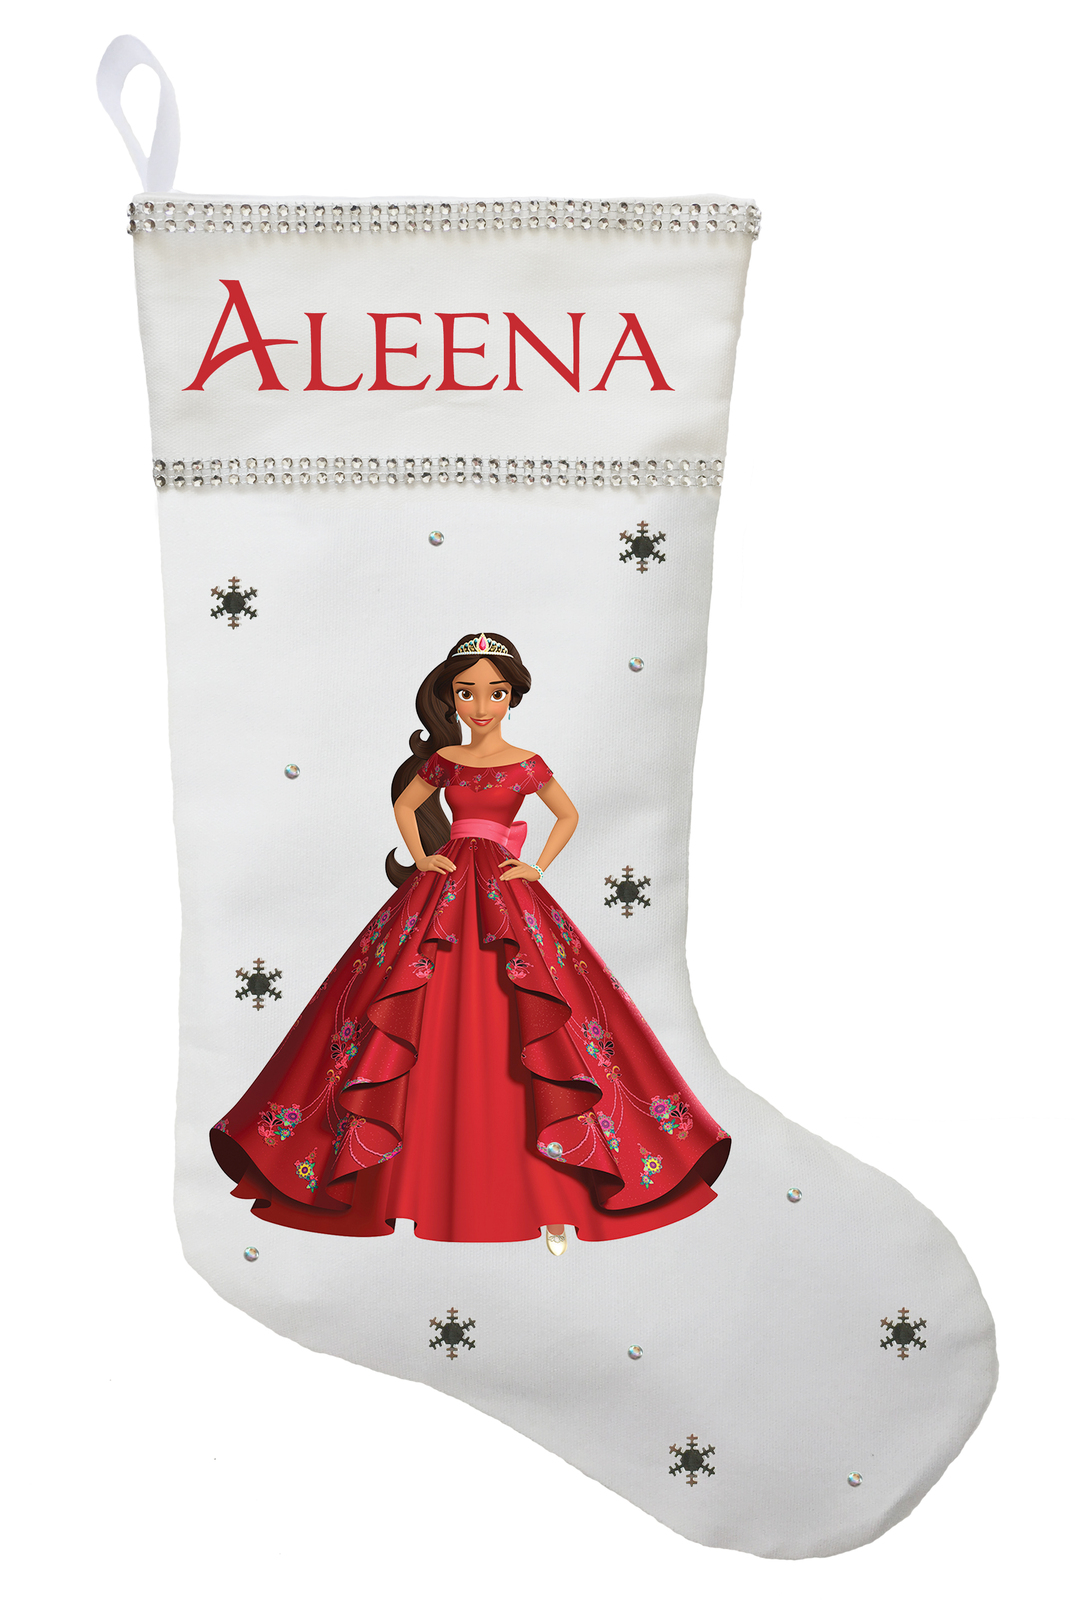 Princess Elena Christmas Stocking, Personalized Elena Stocking